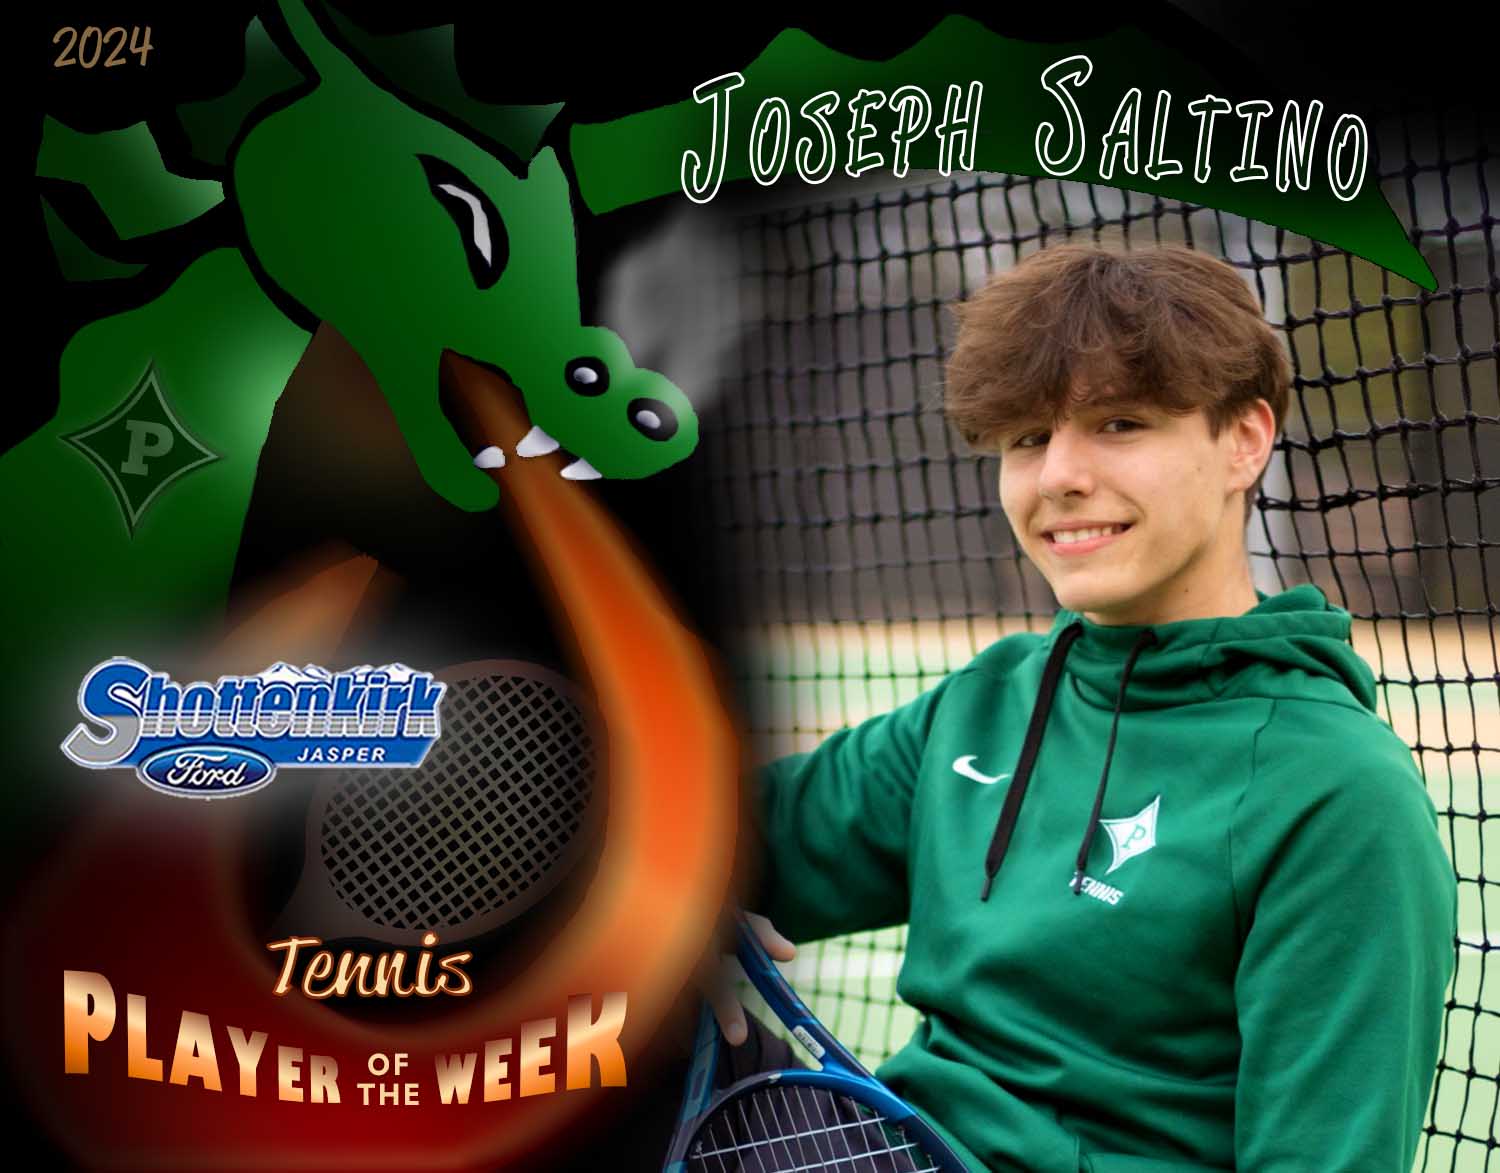 PHS Boys Tennis Player of the Week #2 - Joseph Saltino